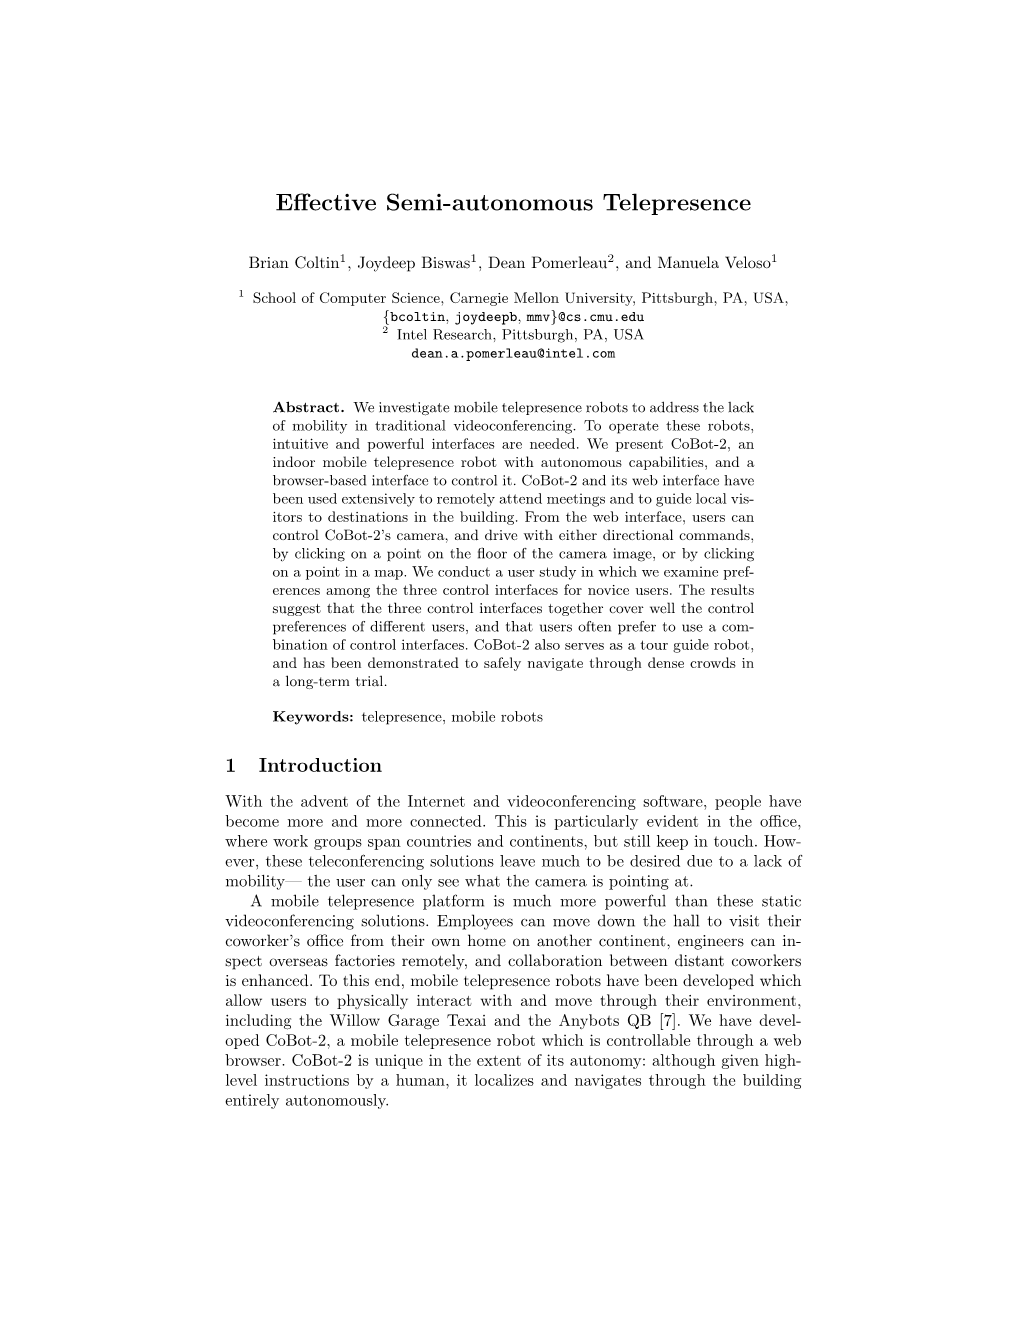 Effective Semi-Autonomous Telepresence